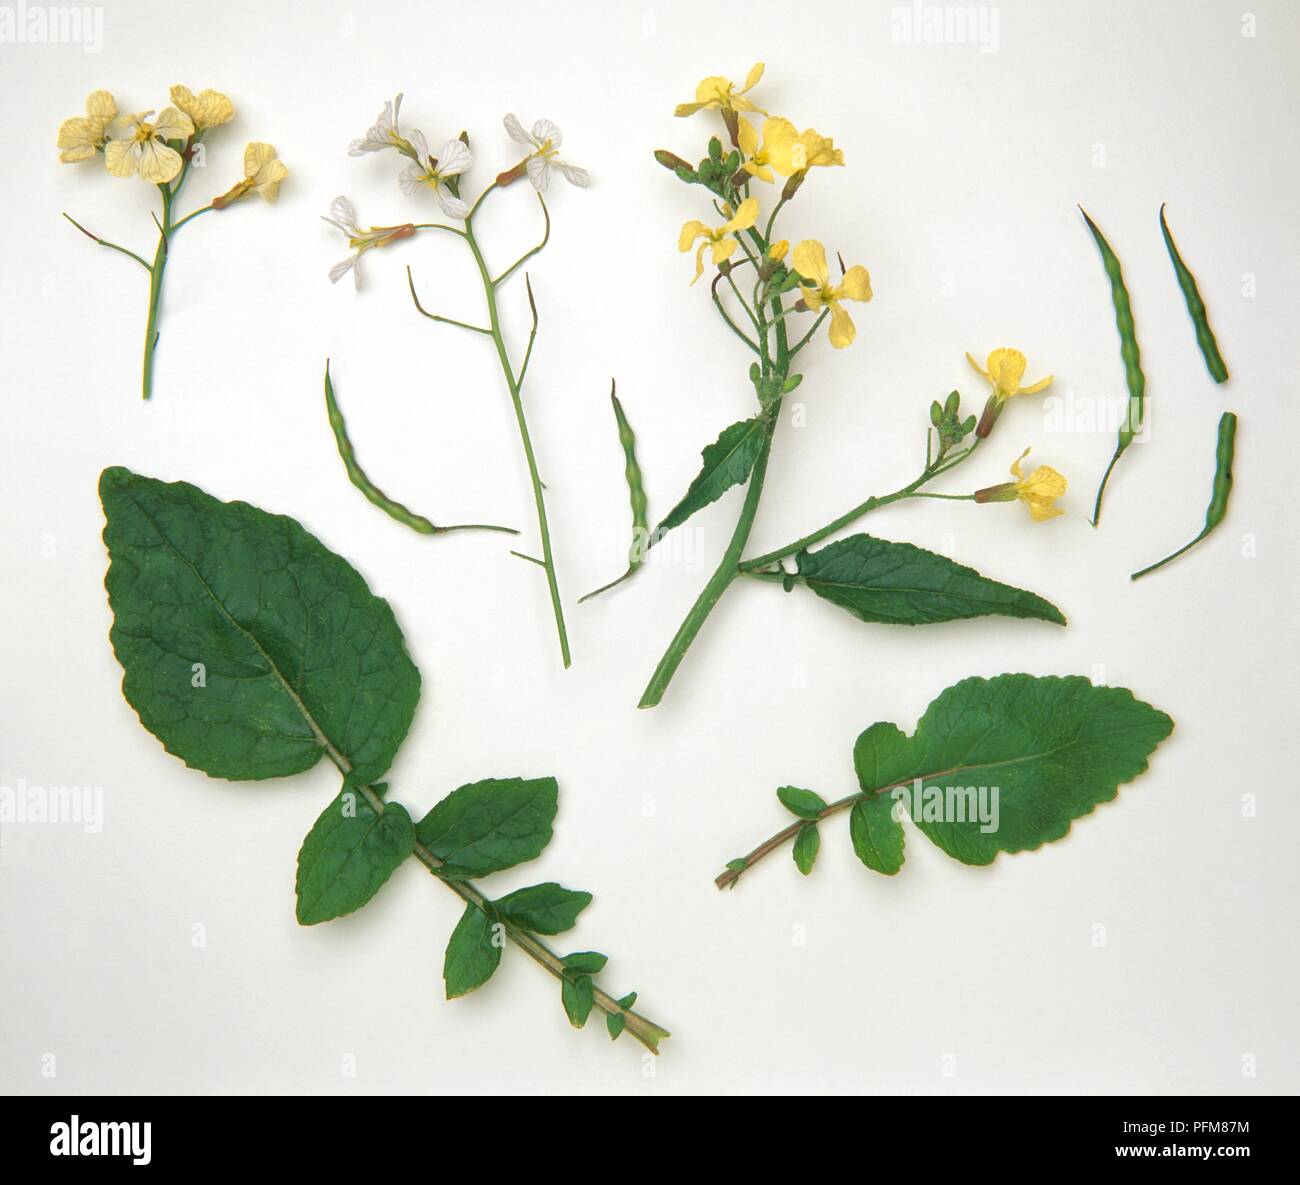 Raphanus raphanistrum (Wild radish), white and yellow flowers, and leaves Stock Photo